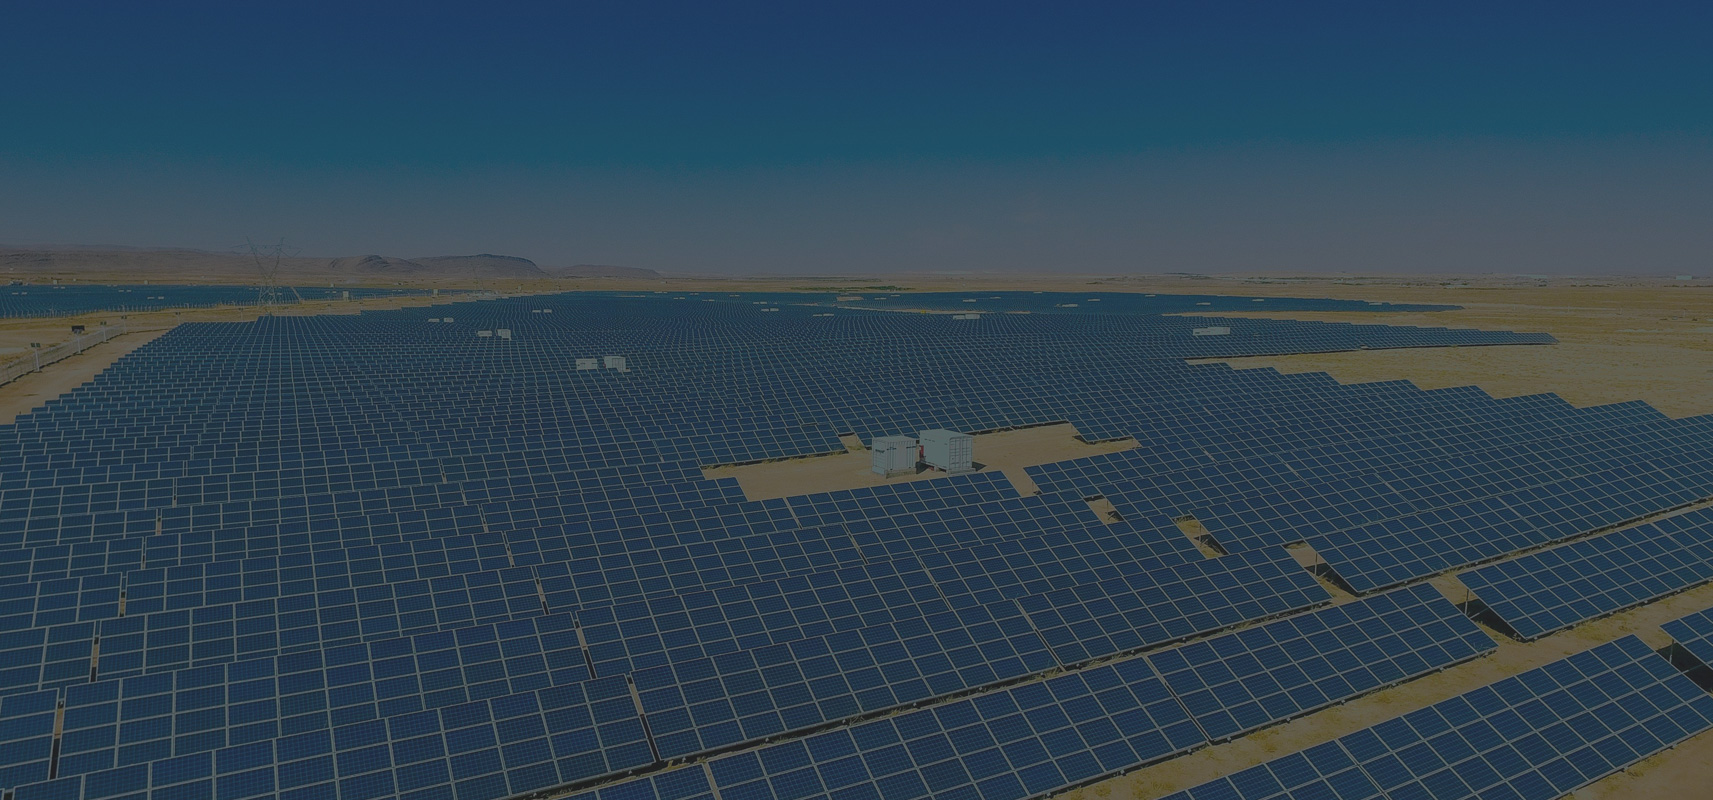 Photovoltaic power generation